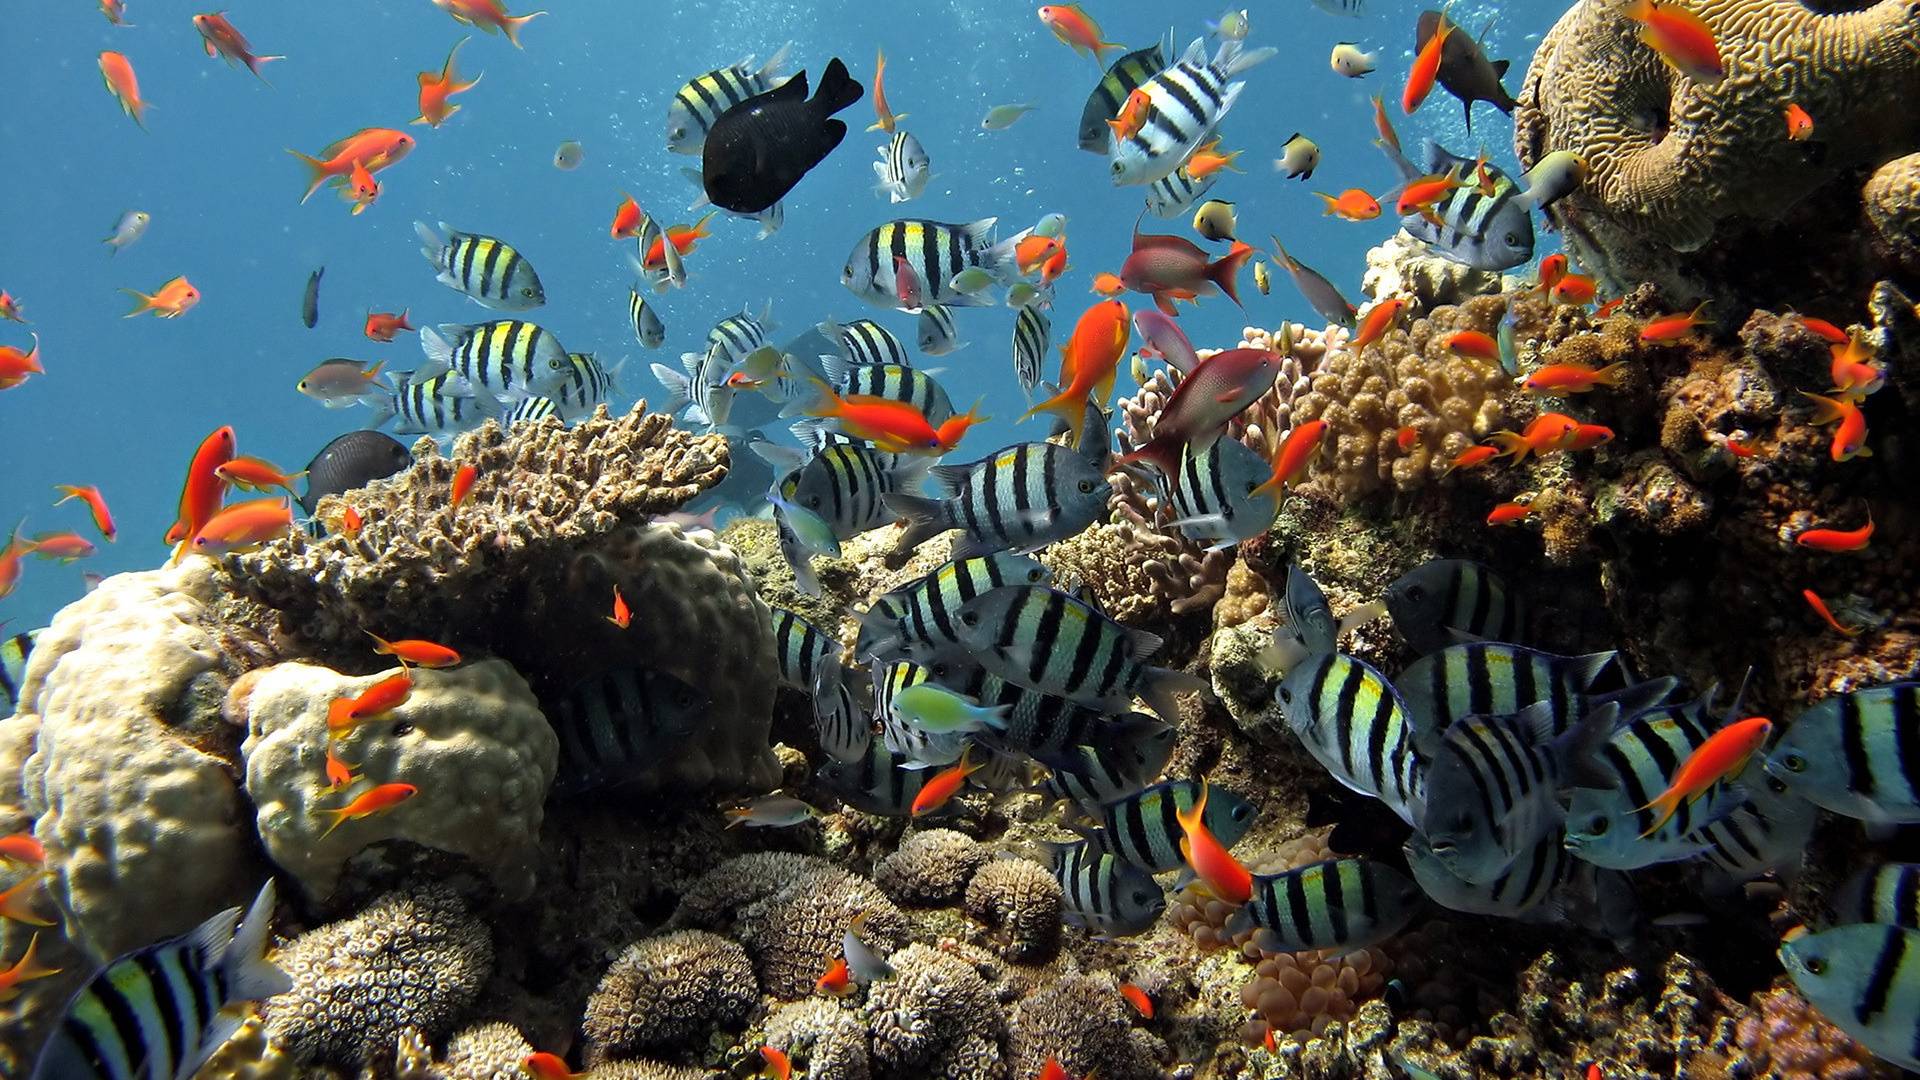 Fish Wallpaper Desktop Coral Bubbles Underwater Image Theme